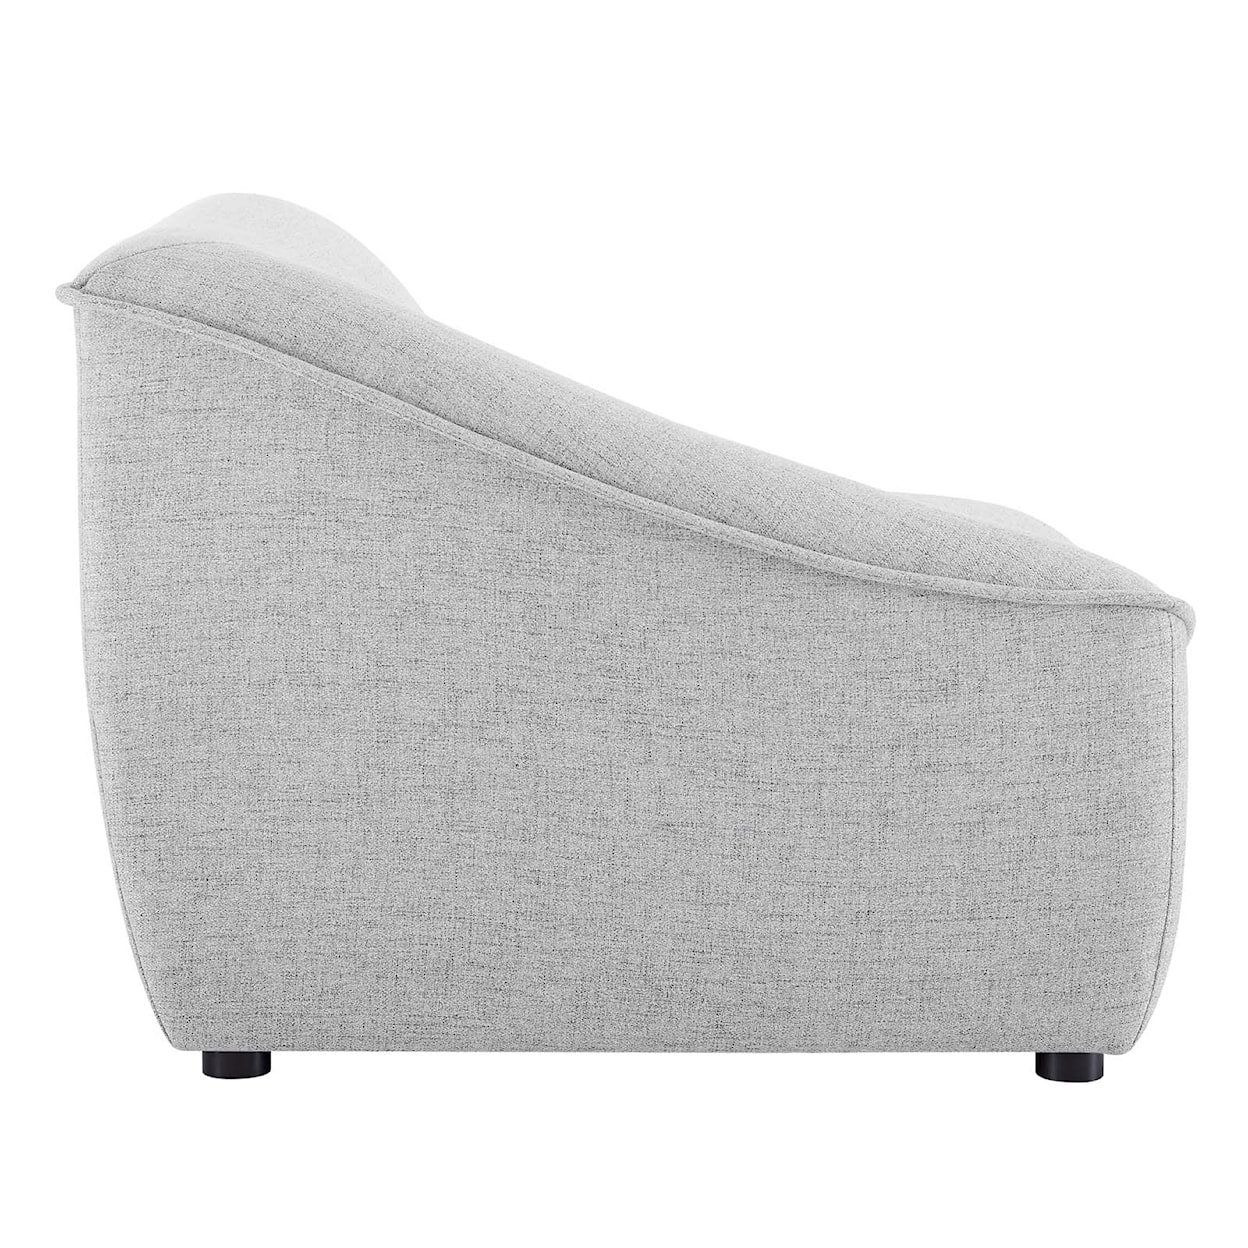 Modway Comprise 5-Piece Sectional Sofa